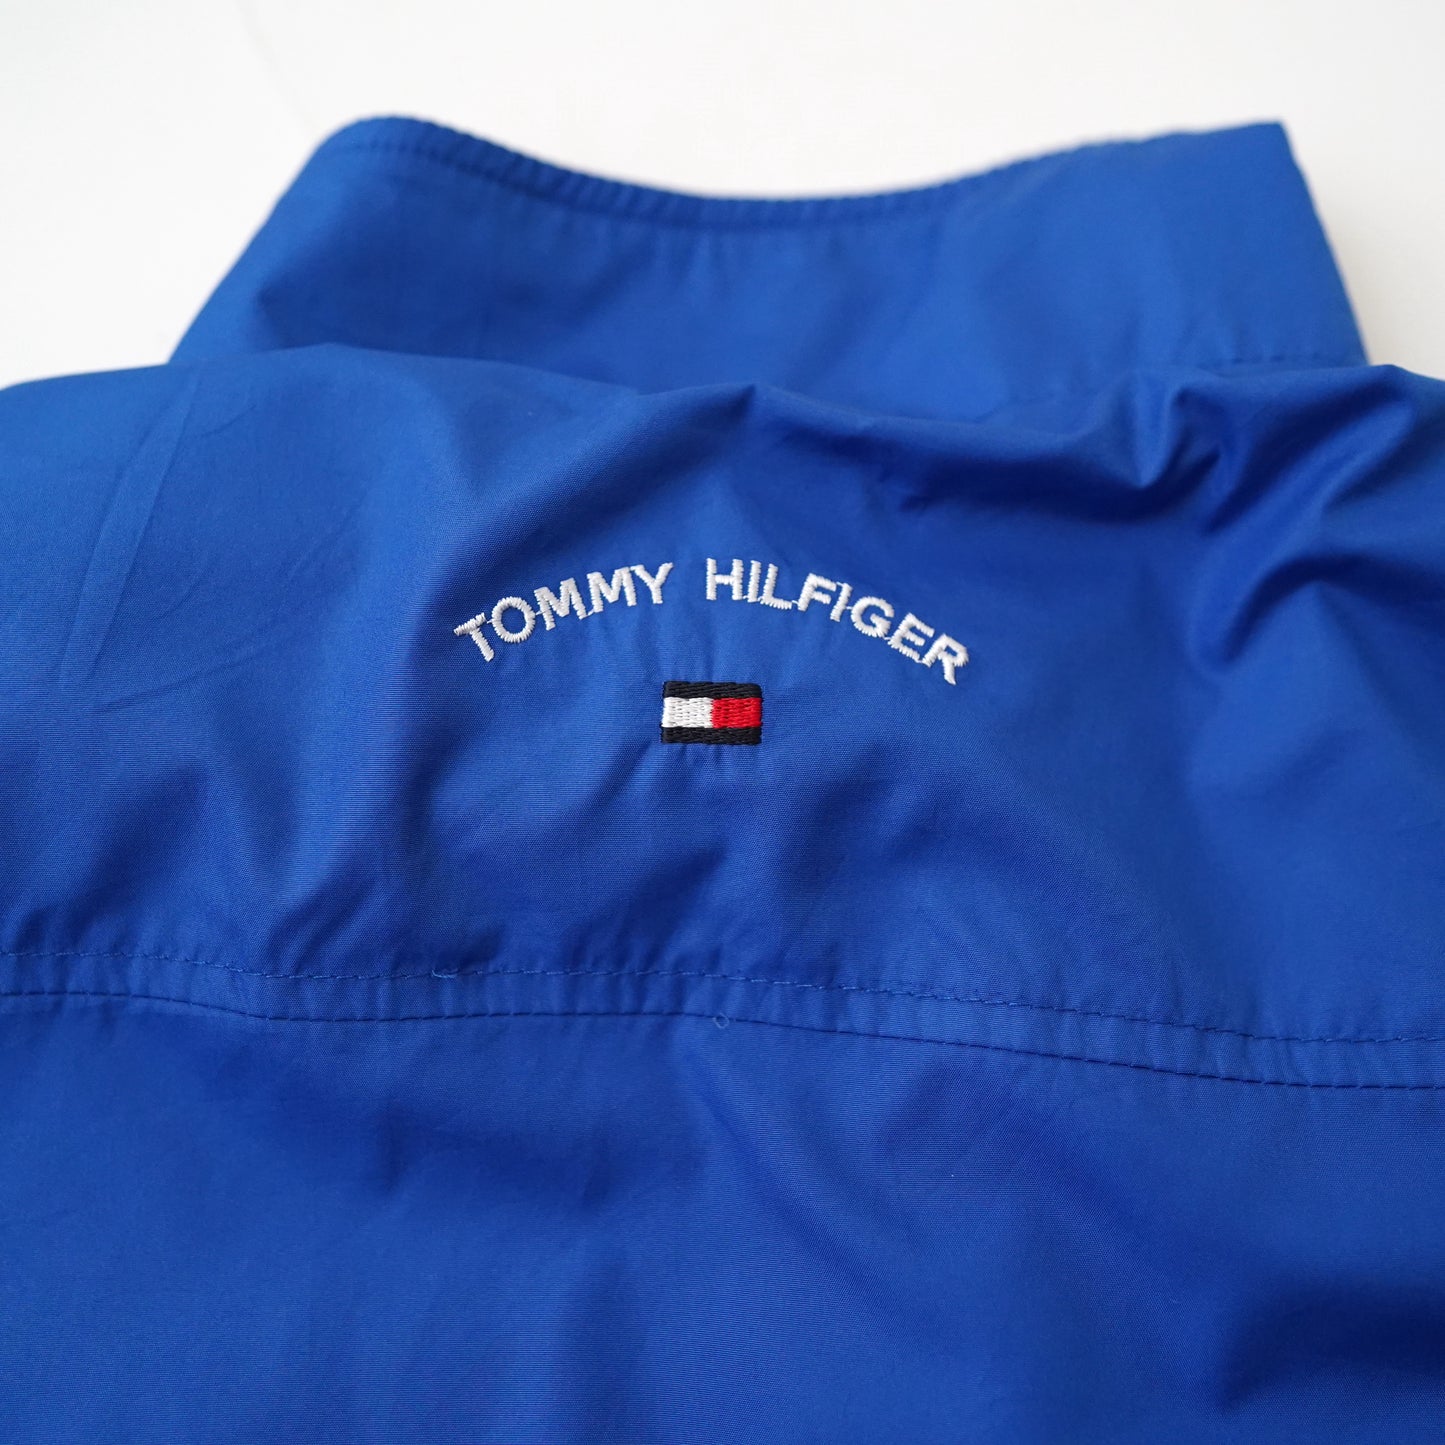 00s TOMMY HILFIGER jacket